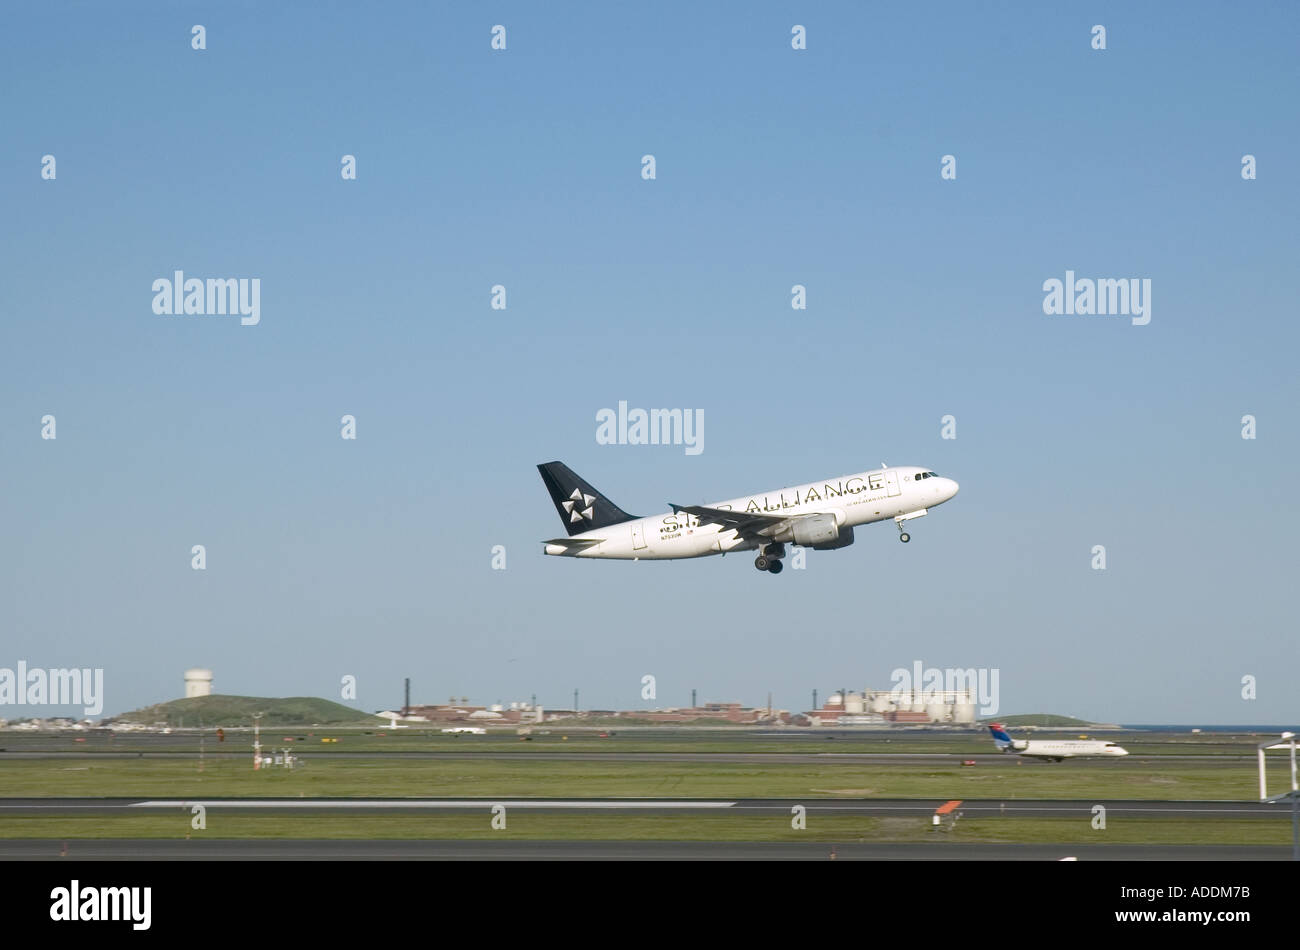 A Star Alliance passenger jet taking off from Logan International Airport in Boston Massachusetts Stock Photo